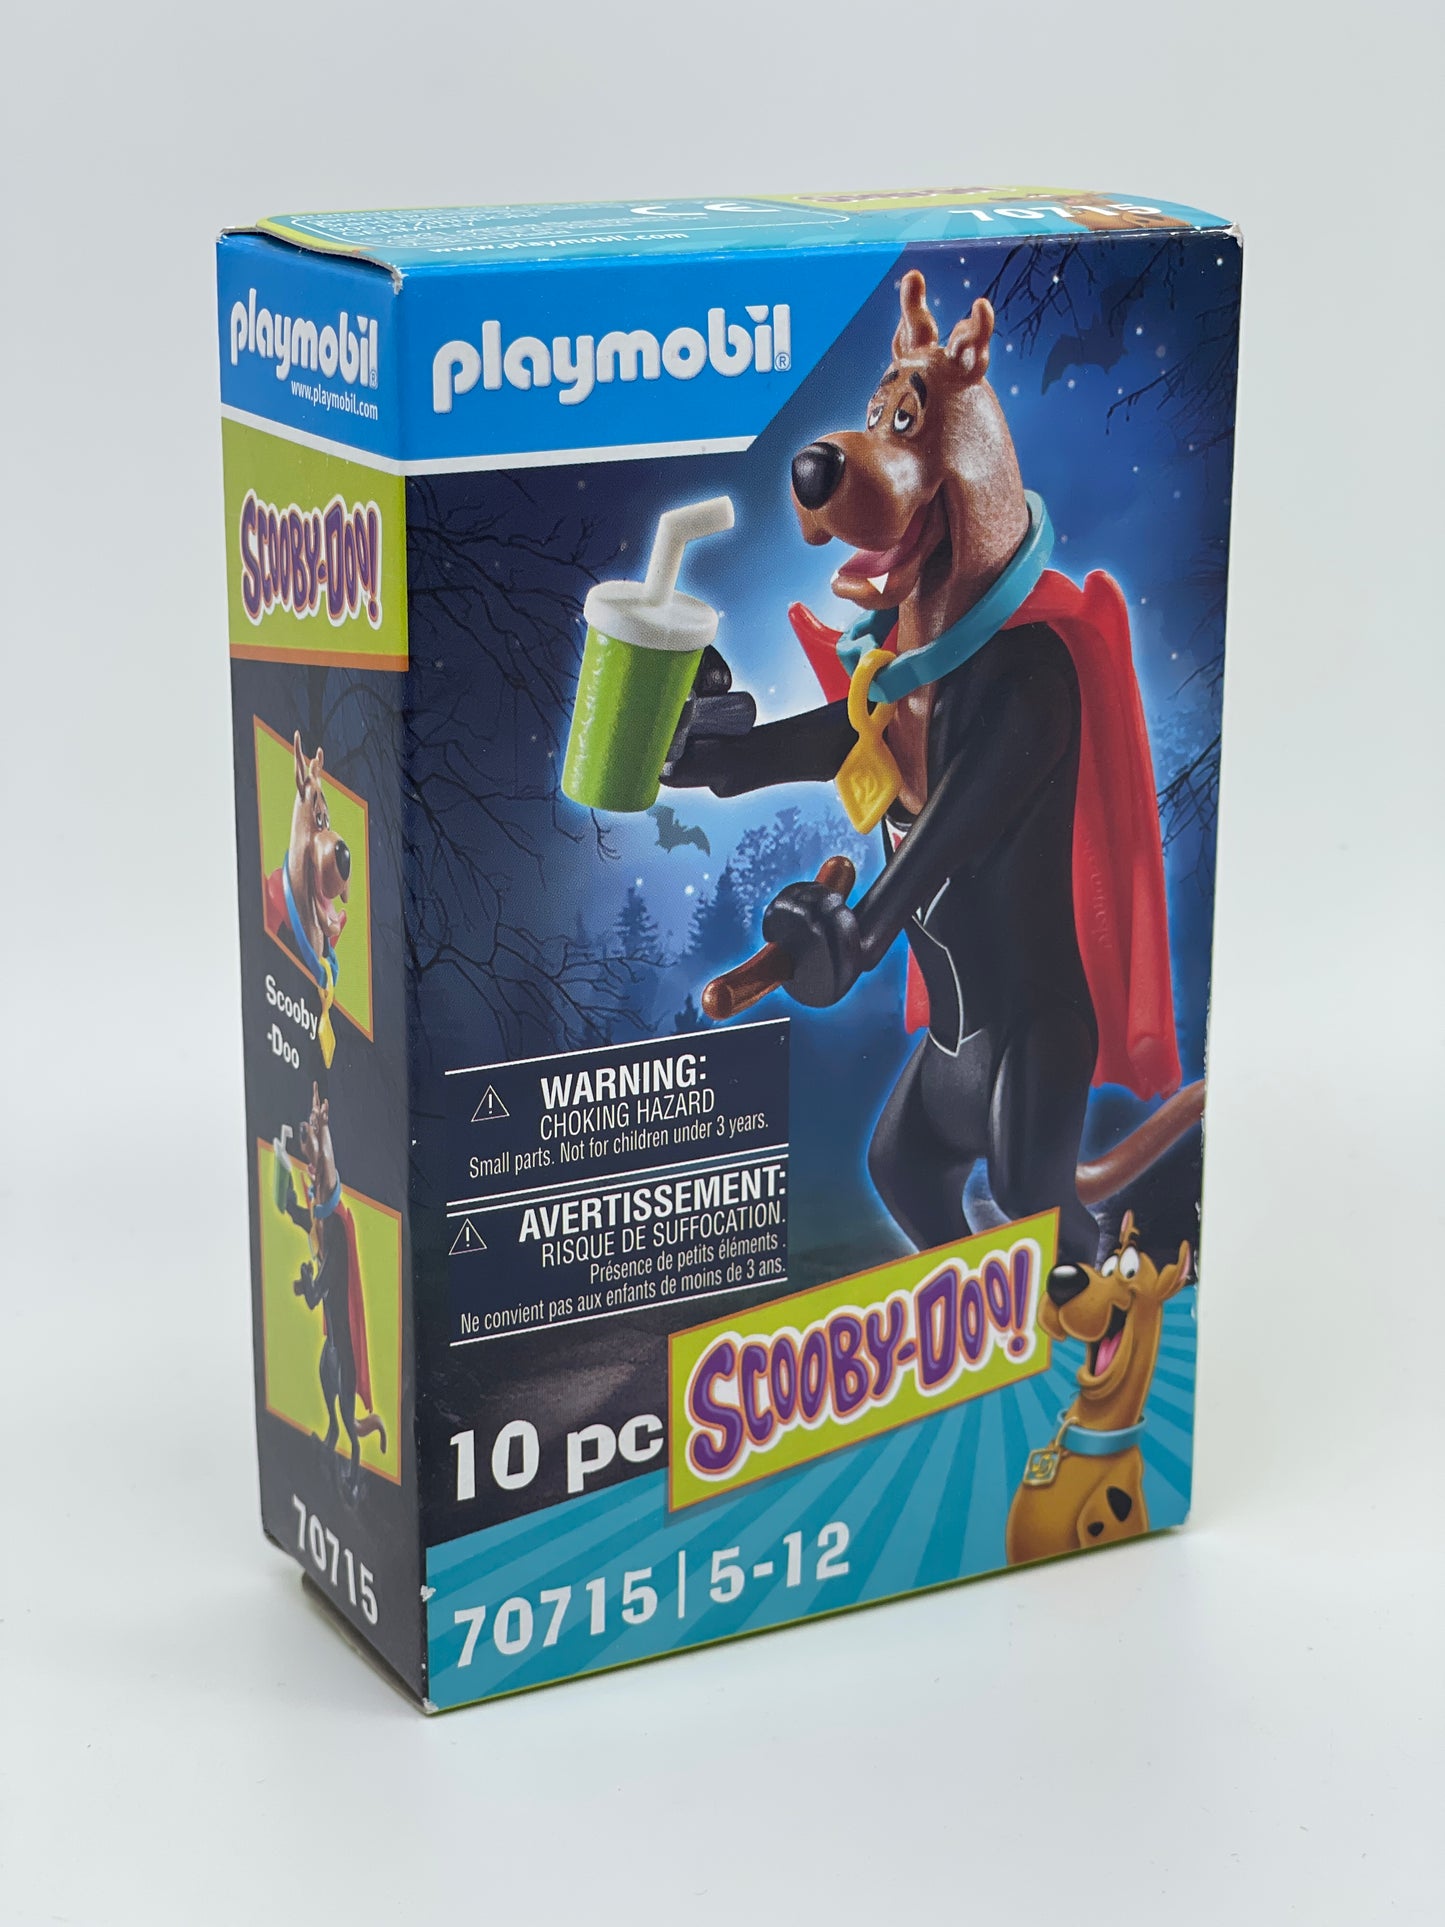 Playmobil "Vampir / Dracula" Scooby Doo mit Zubehör 70715 (2021)